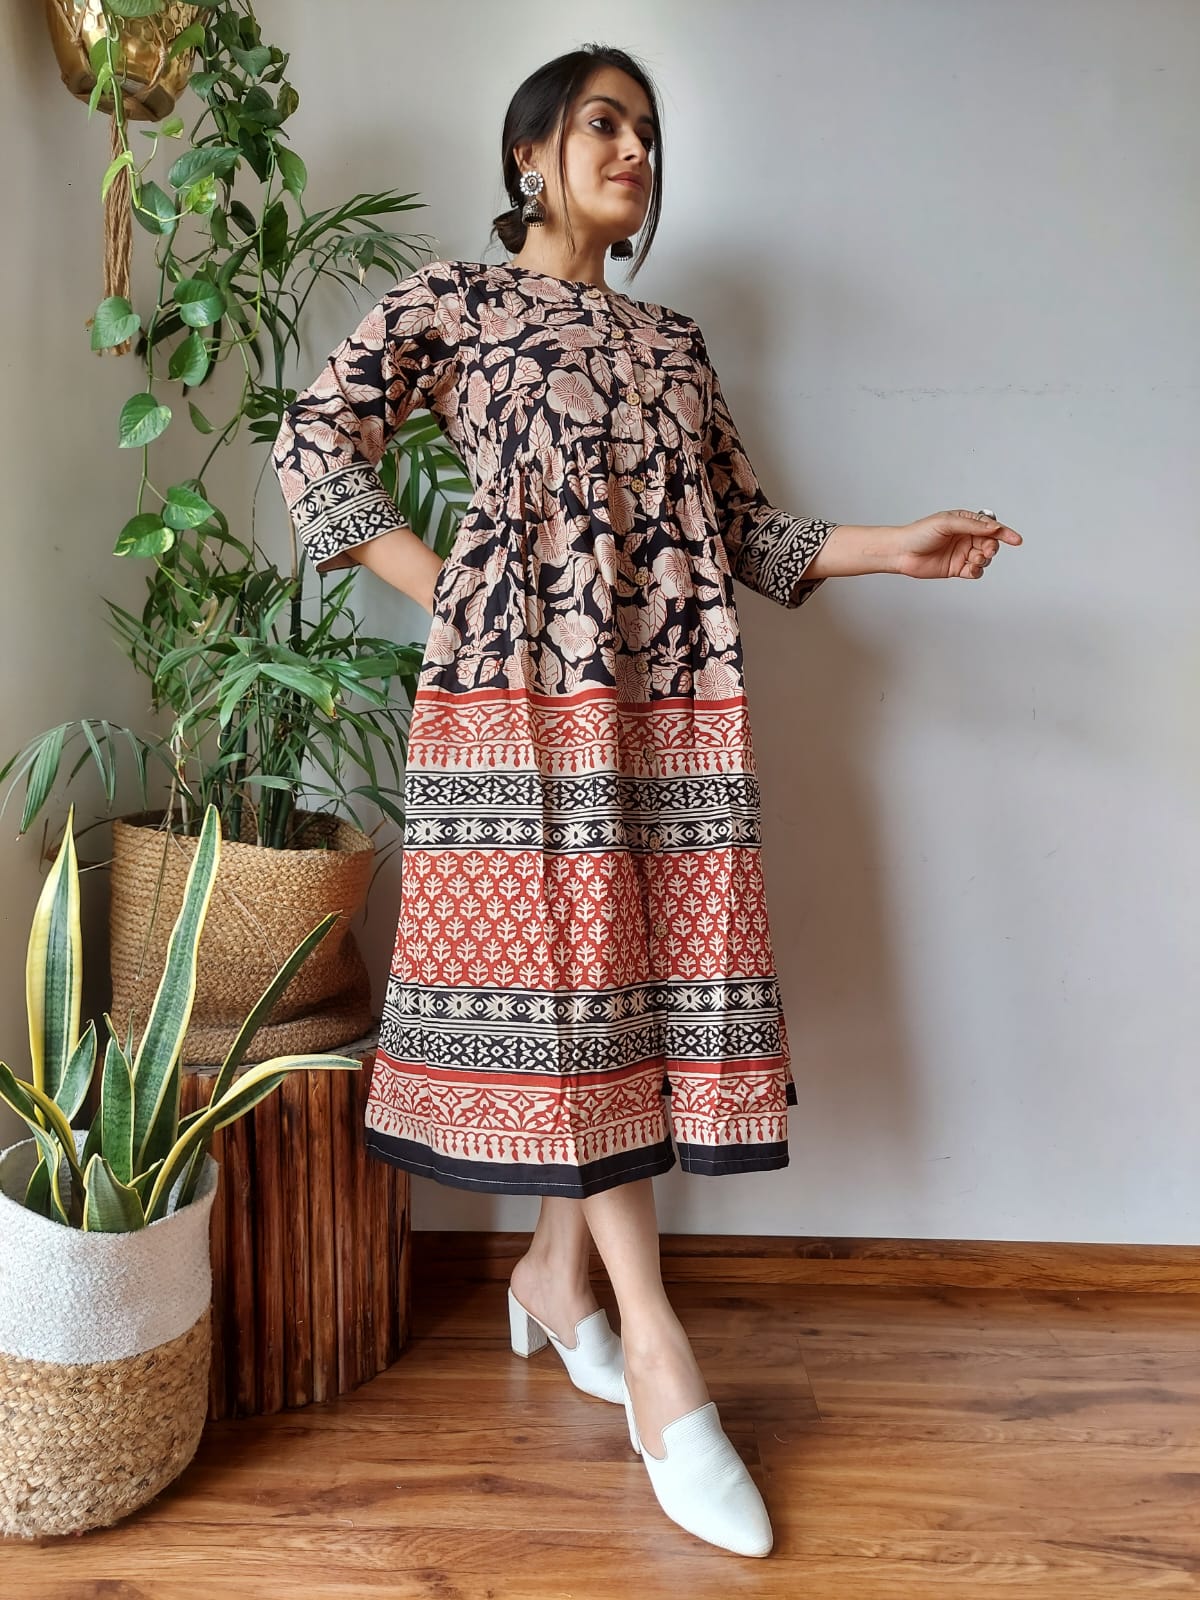 Amazon.com: Dress for Women's Hand Block Print Indian Cotton long sleeve  maxi Dress Block Print Ethnic Summer Dress (M) : Handmade Products